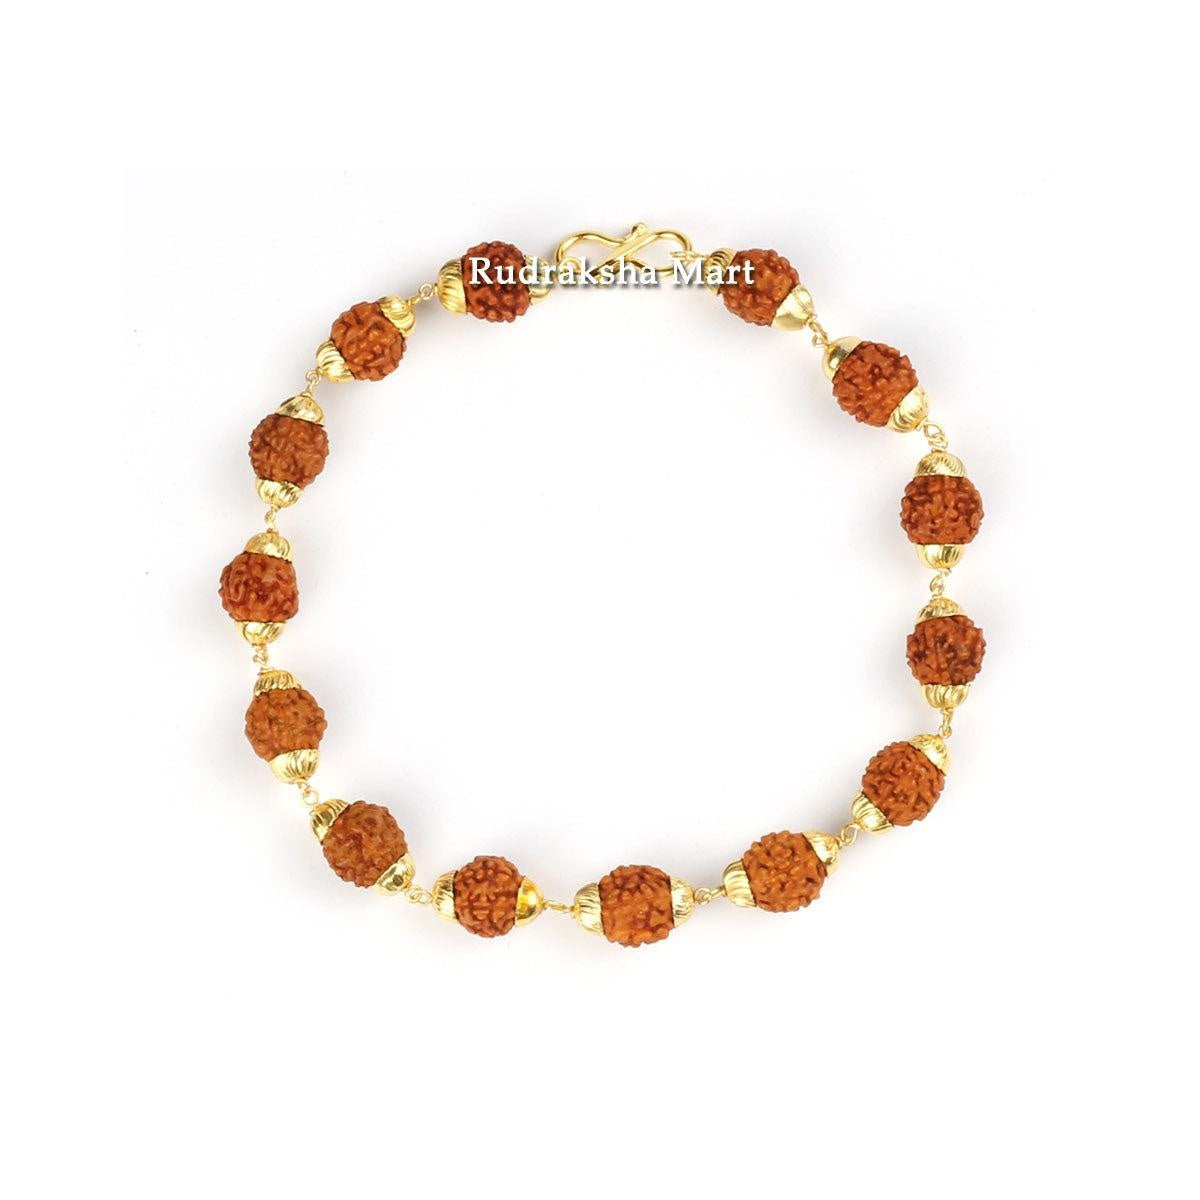 22 karat yellow gold with natural rudraksha beads handmade bracelet  fabulous vintage designer 758 85 9 gifting jewelry  TRIBAL  ORNAMENTS